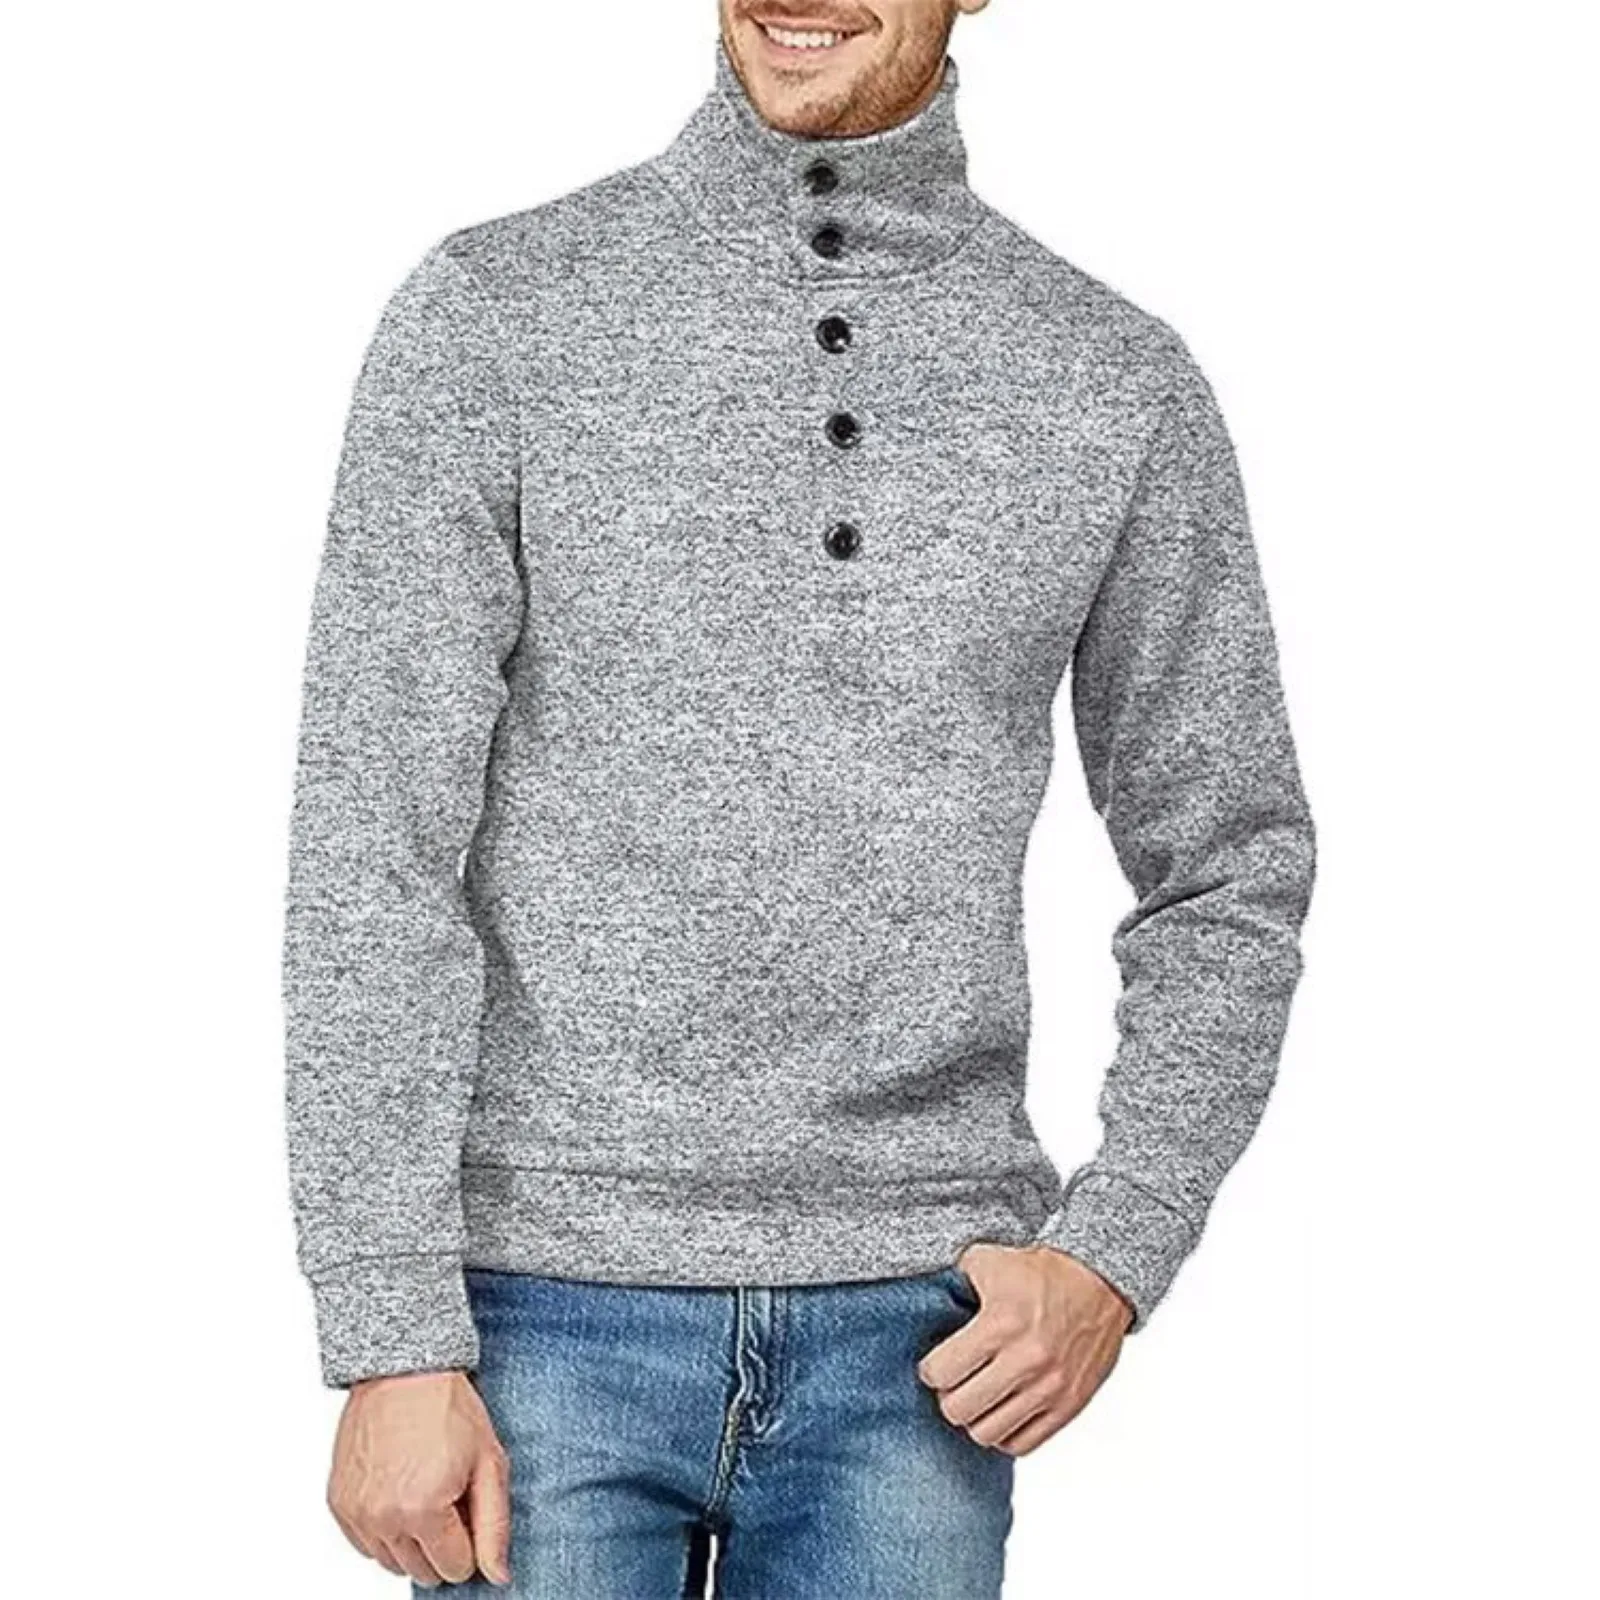 Strick pullover Pullover Fleece Mode Pullover Männer Herbst Winter Kleidung Strickwaren Pullover hochwertige warme Tops Langarm